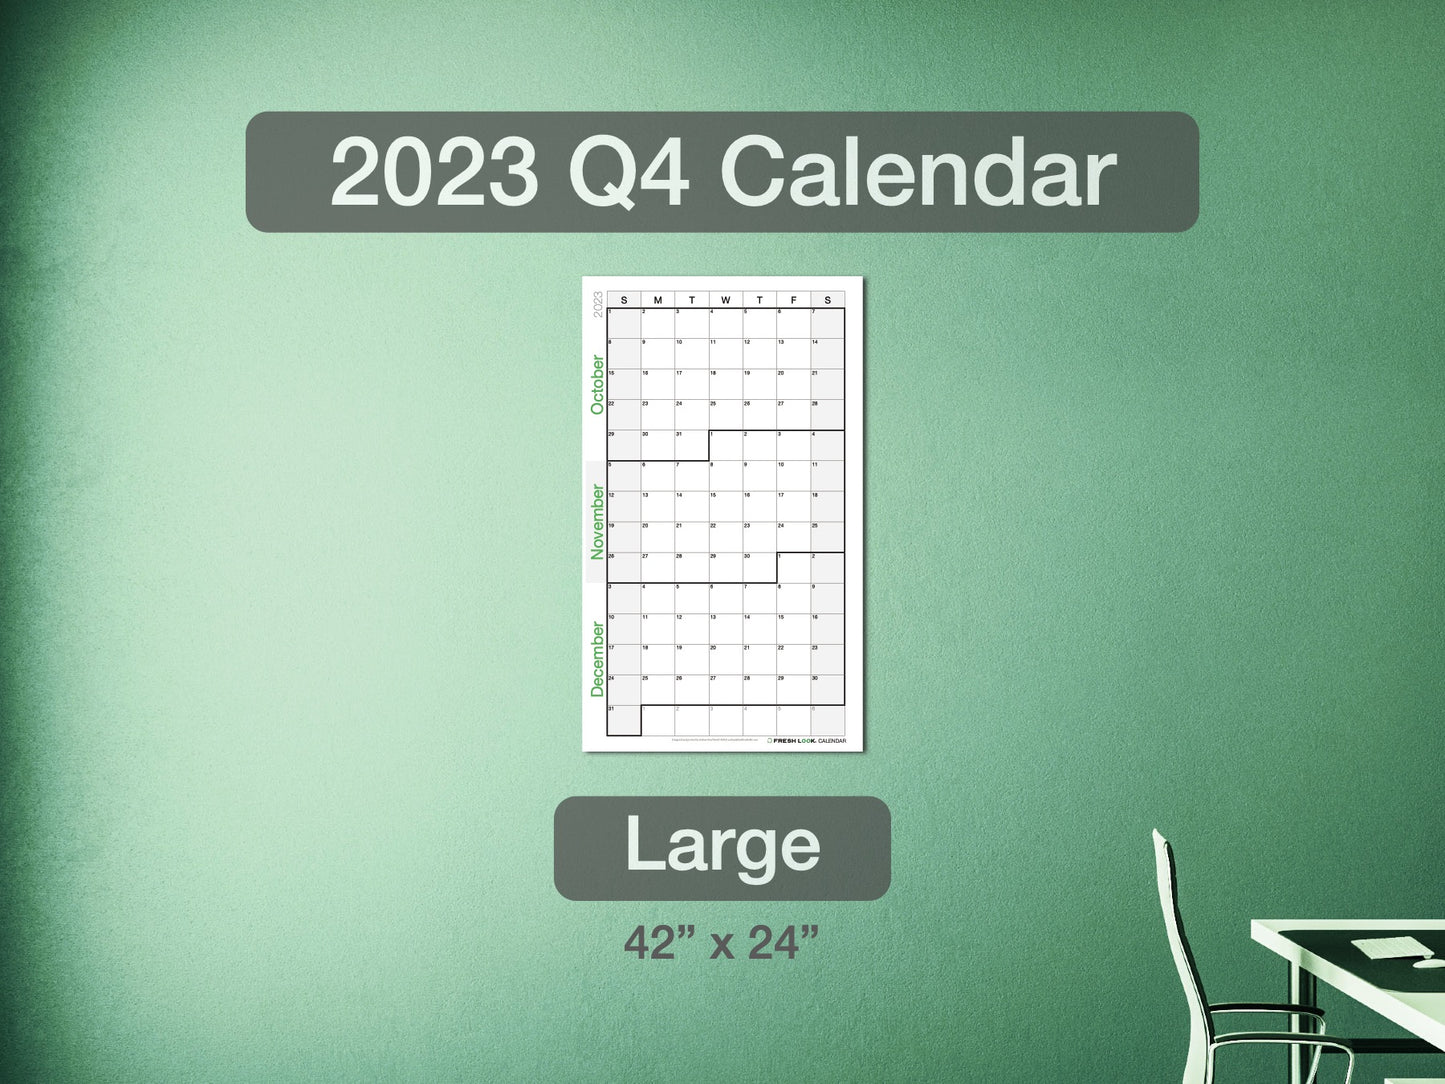 2023 Q4 Calendar Large